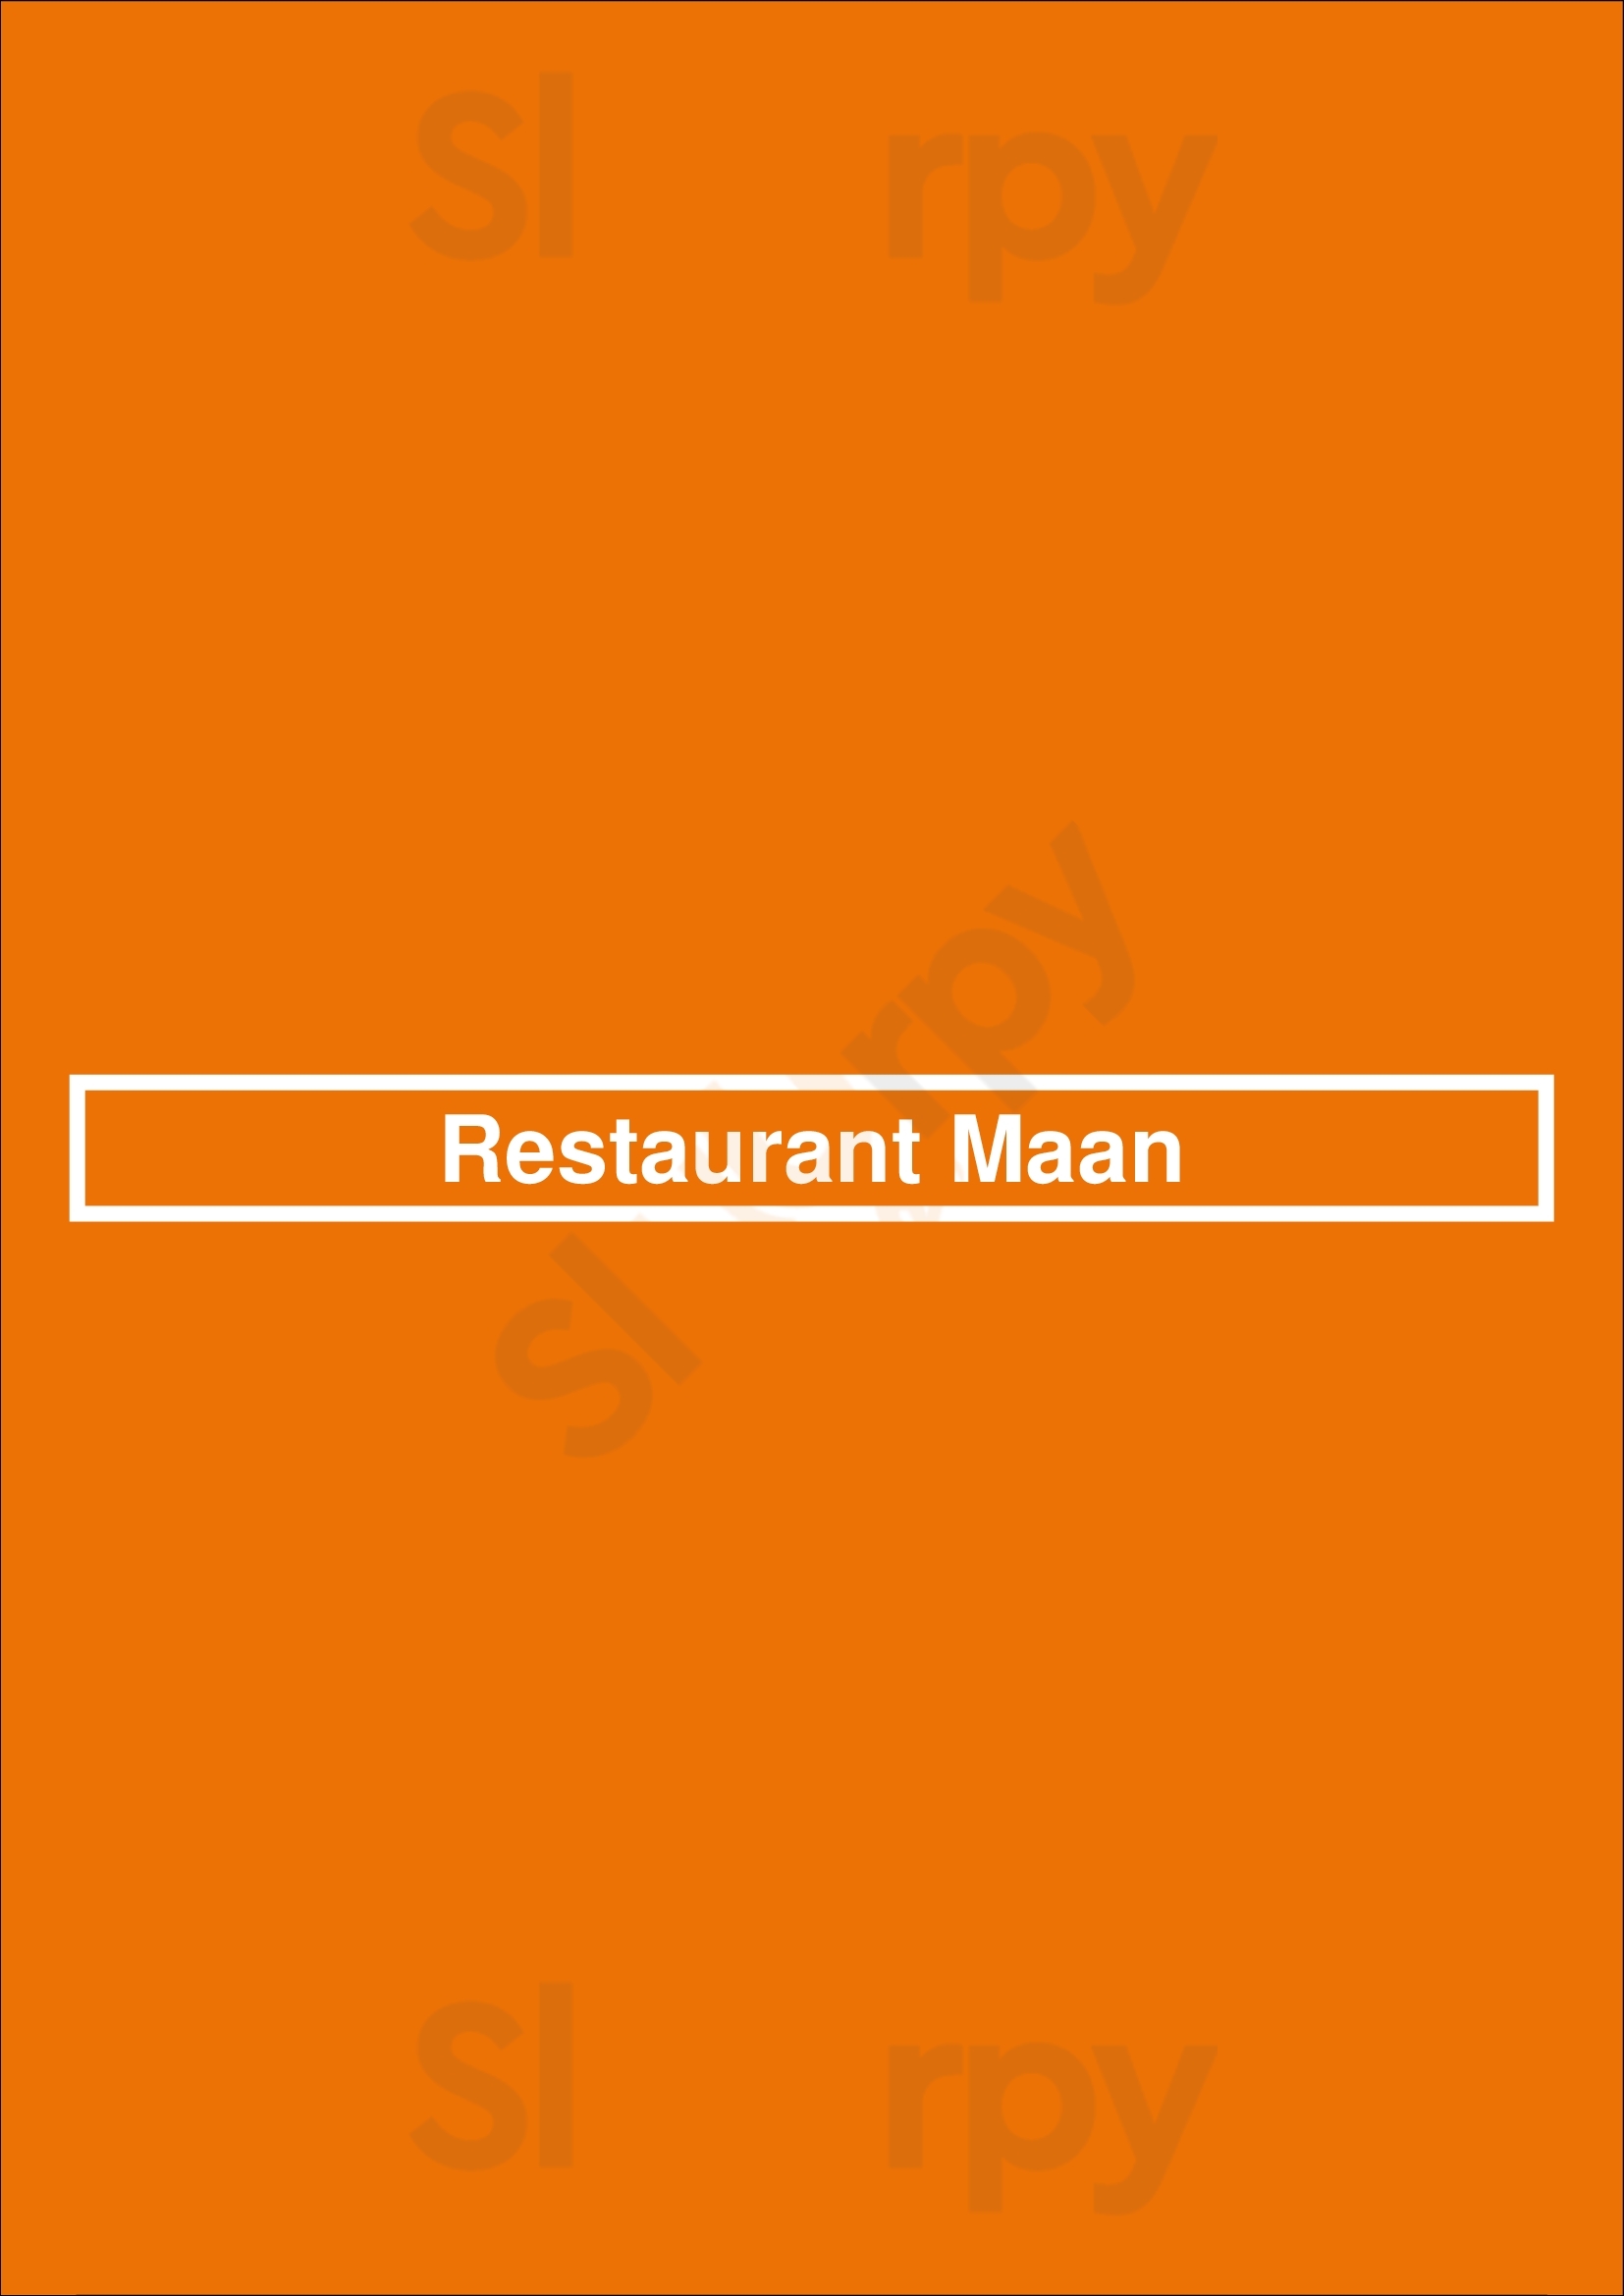 Restaurant Maan Breukelen Menu - 1